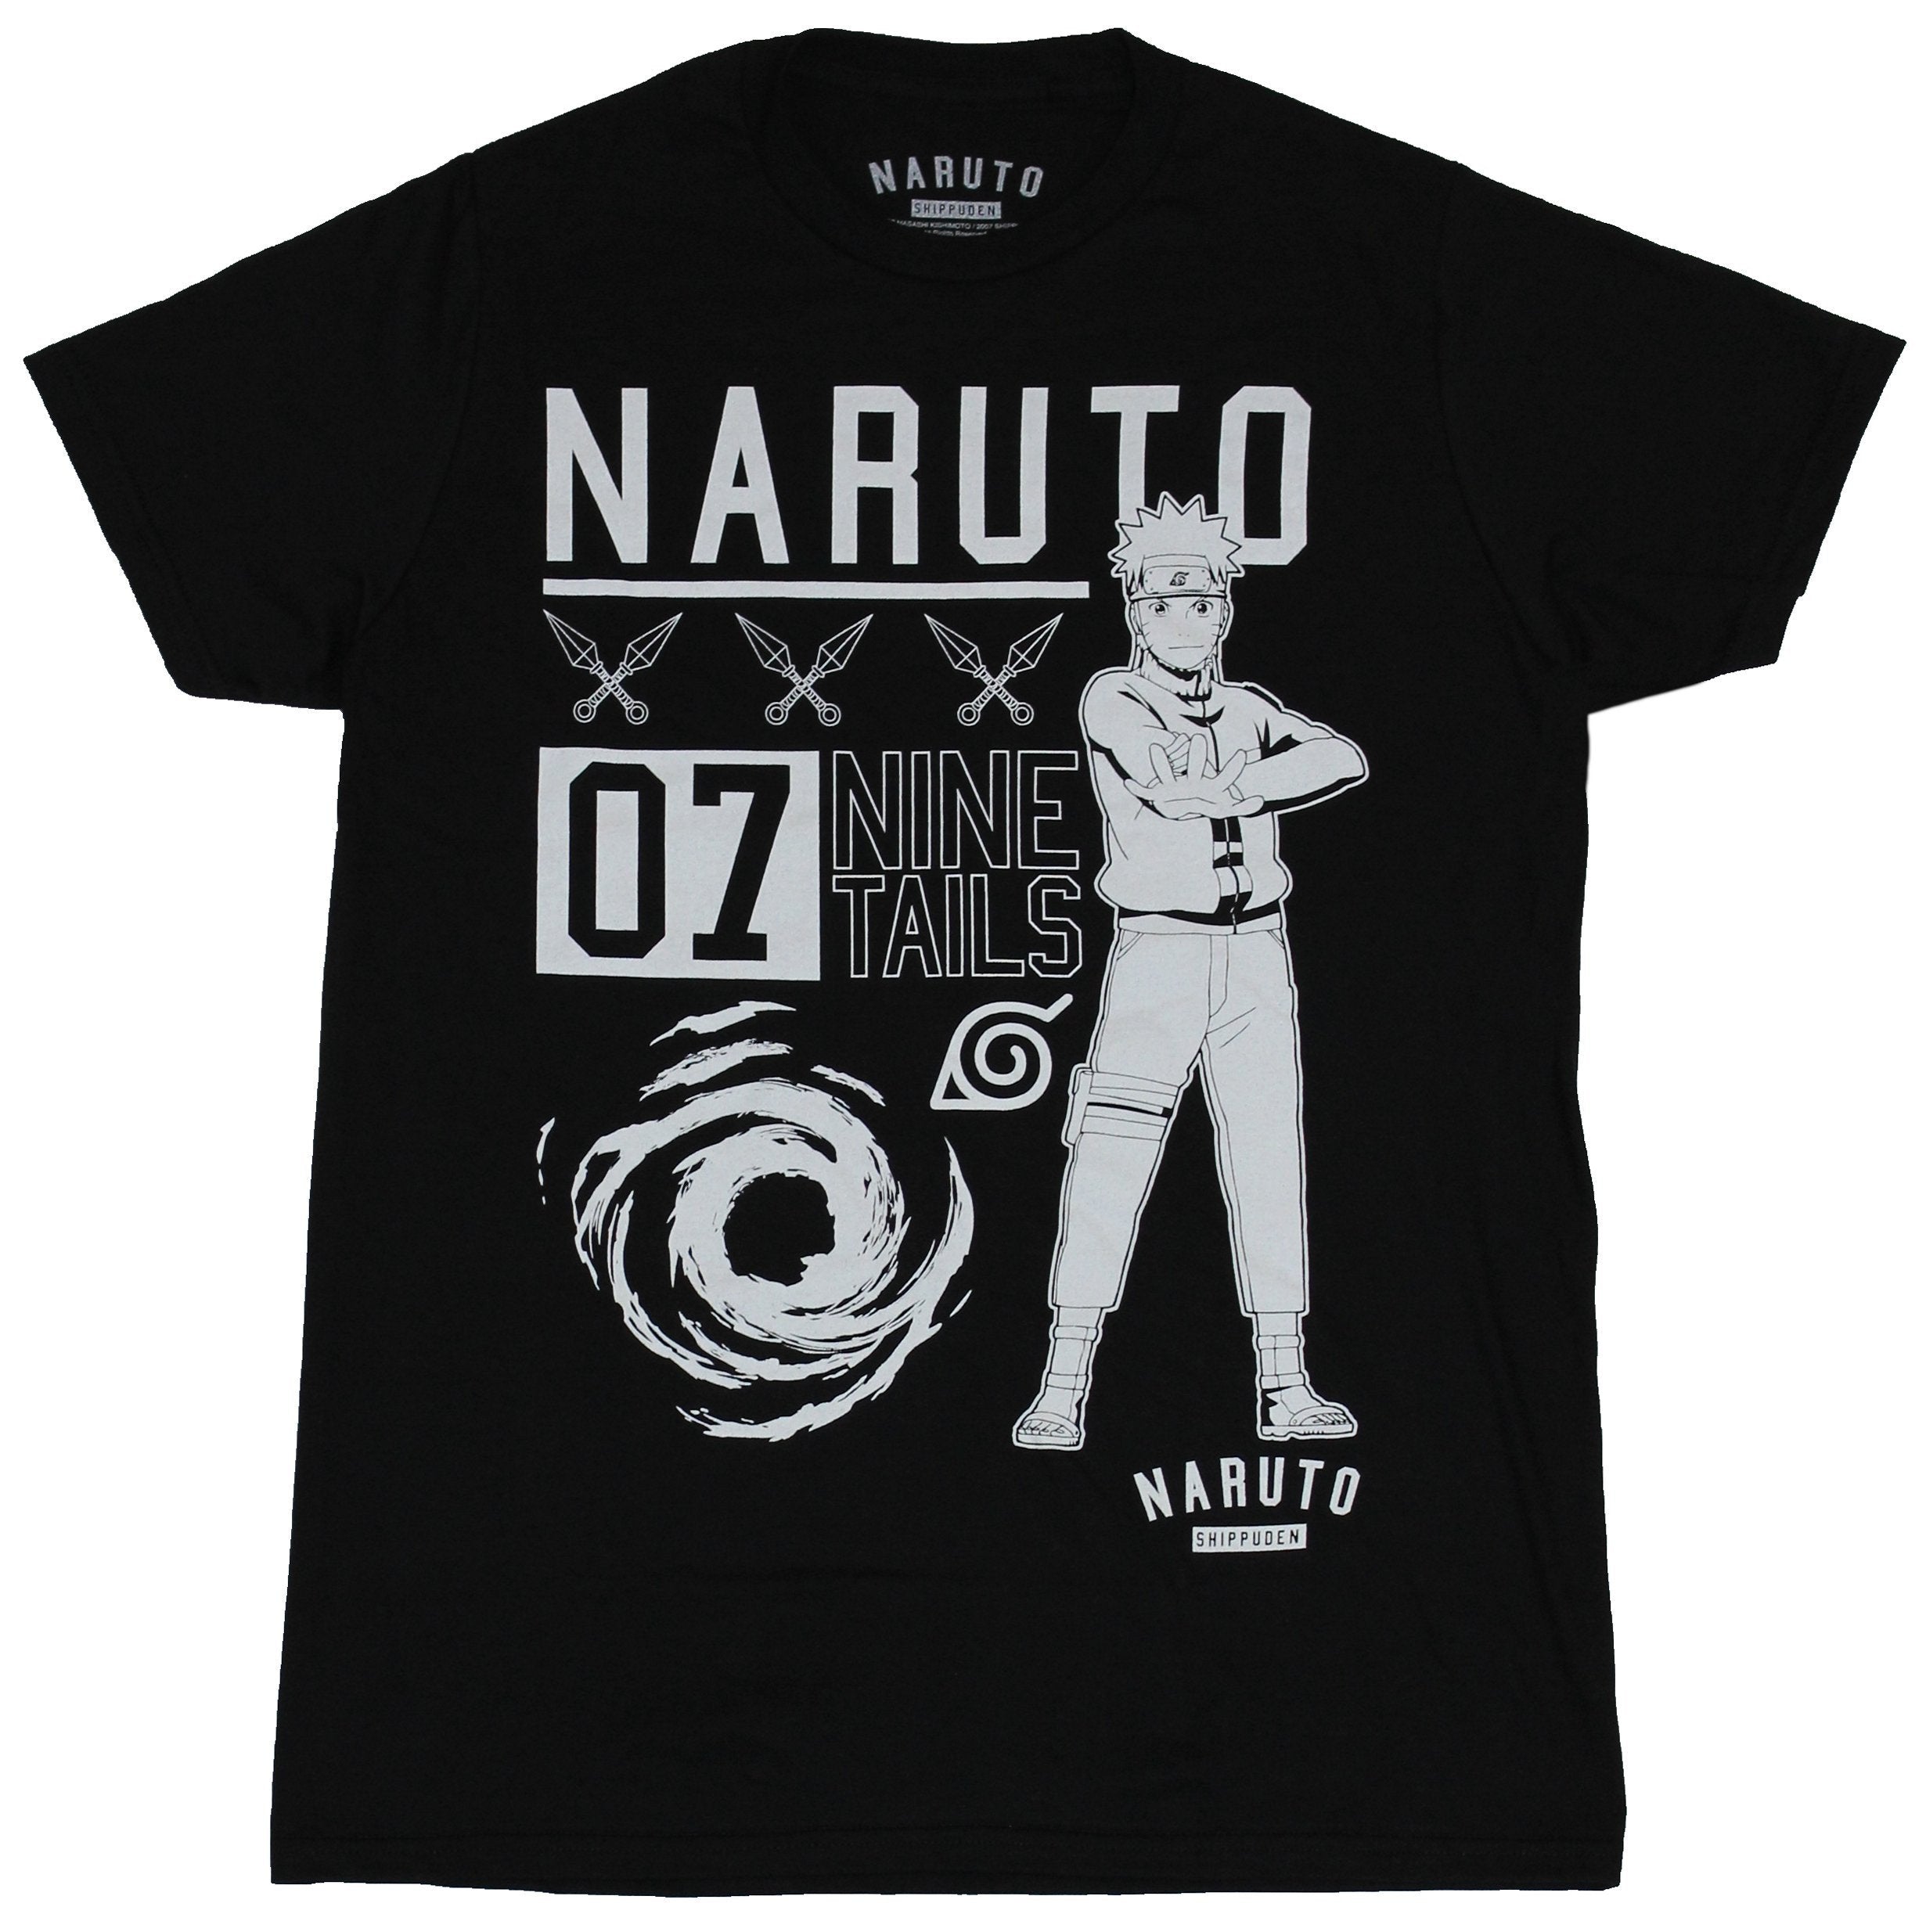 Naruto Shippuden Mens T-Shirt -  Naruto Standing Proud 07 Nine Tails Image